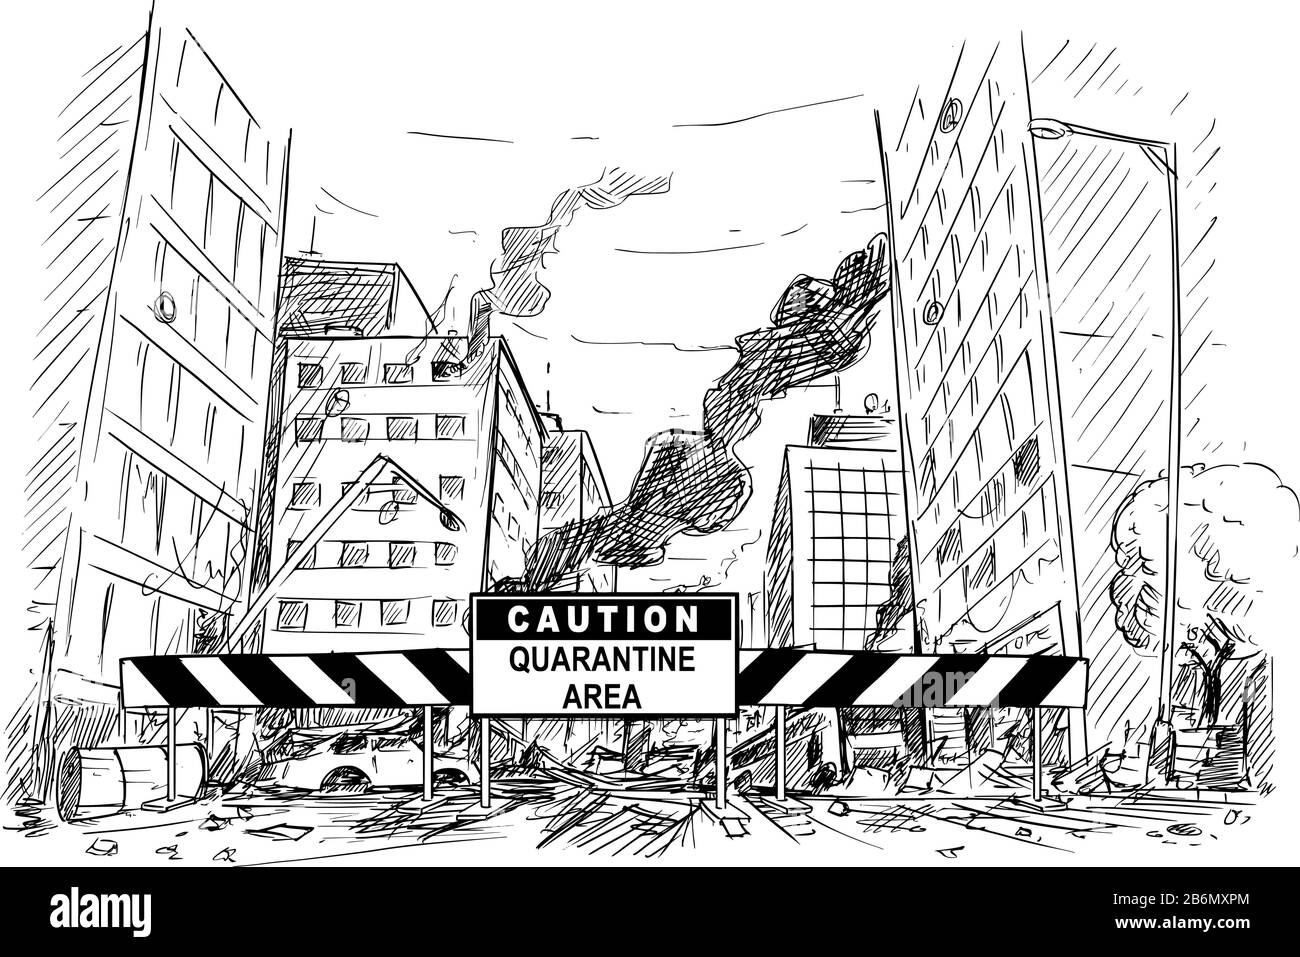 Vector cartoon stick figure drawing conceptual illustration of caution quarantine area roadblock blocking destroyed city street after coronavirus covid-19 epidemic or infection panic. Stock Vector